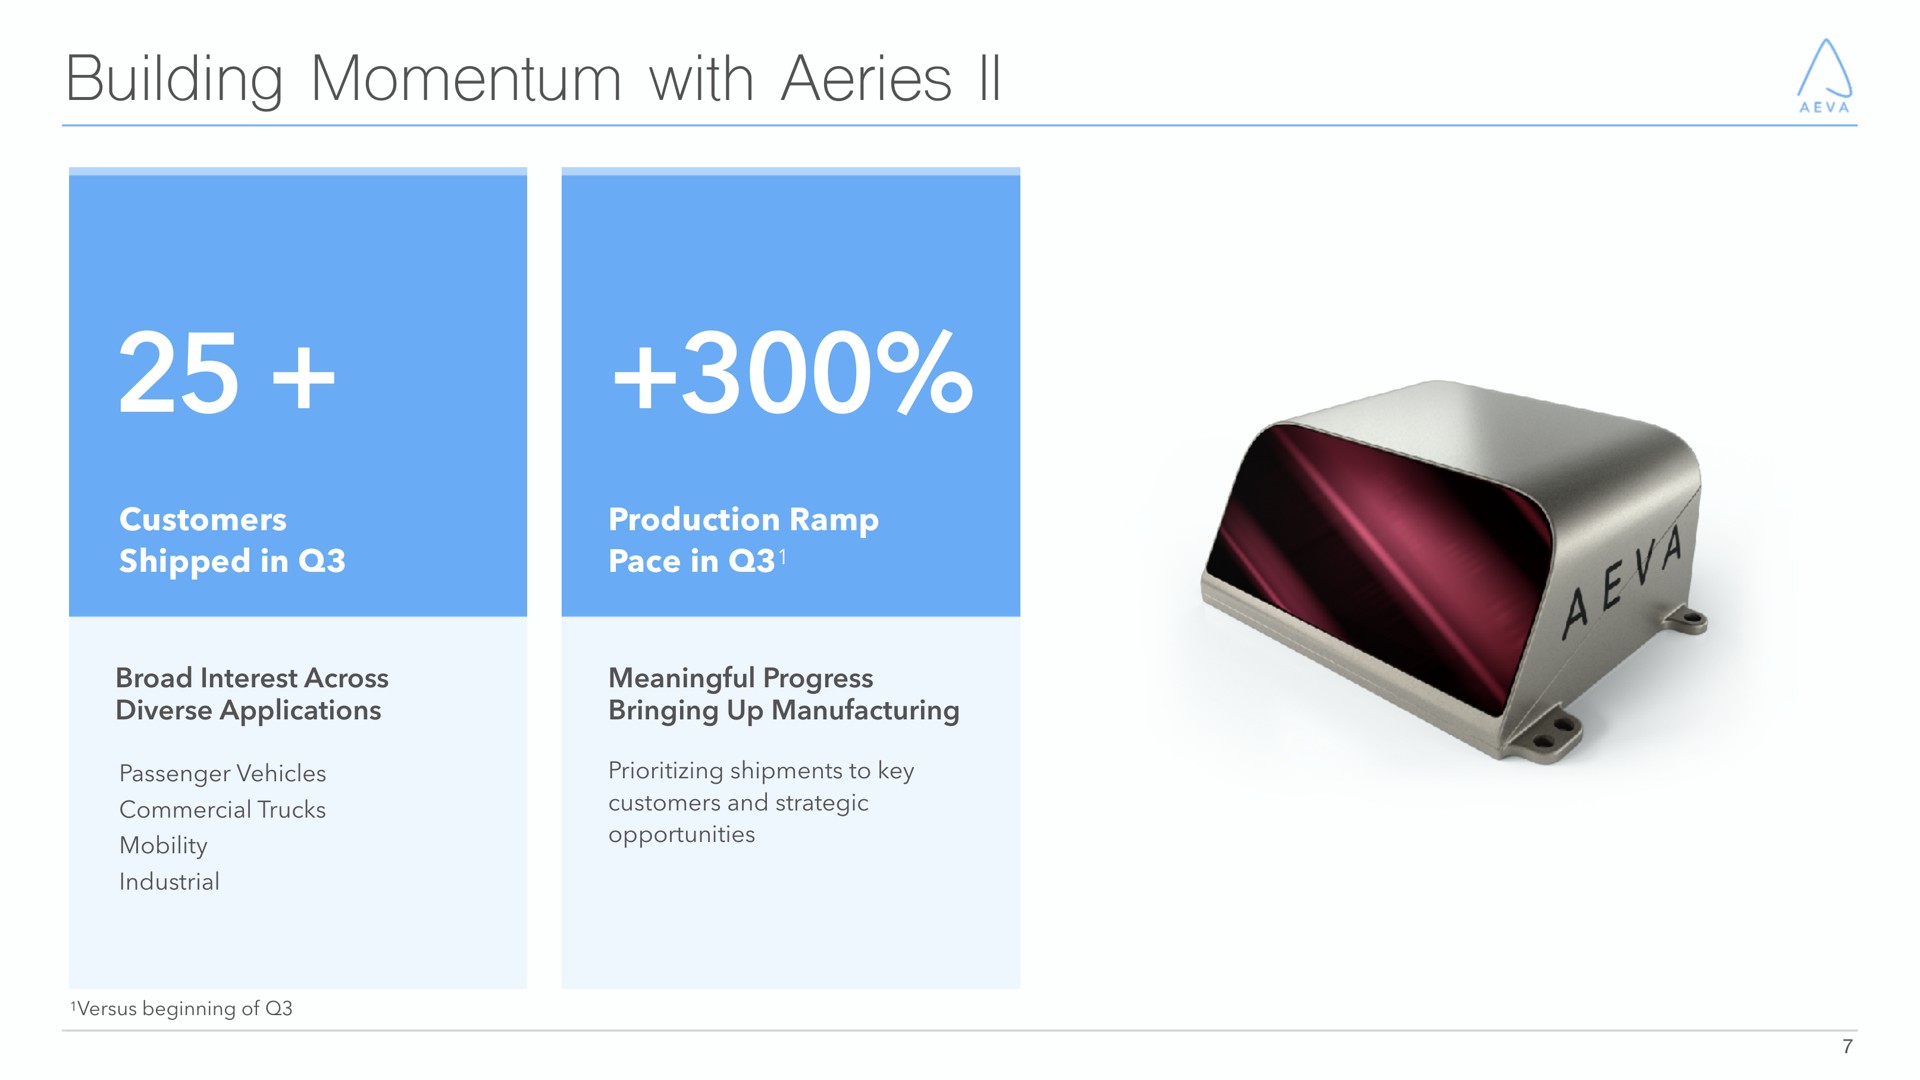 building momentum with aeries oes | Aeva